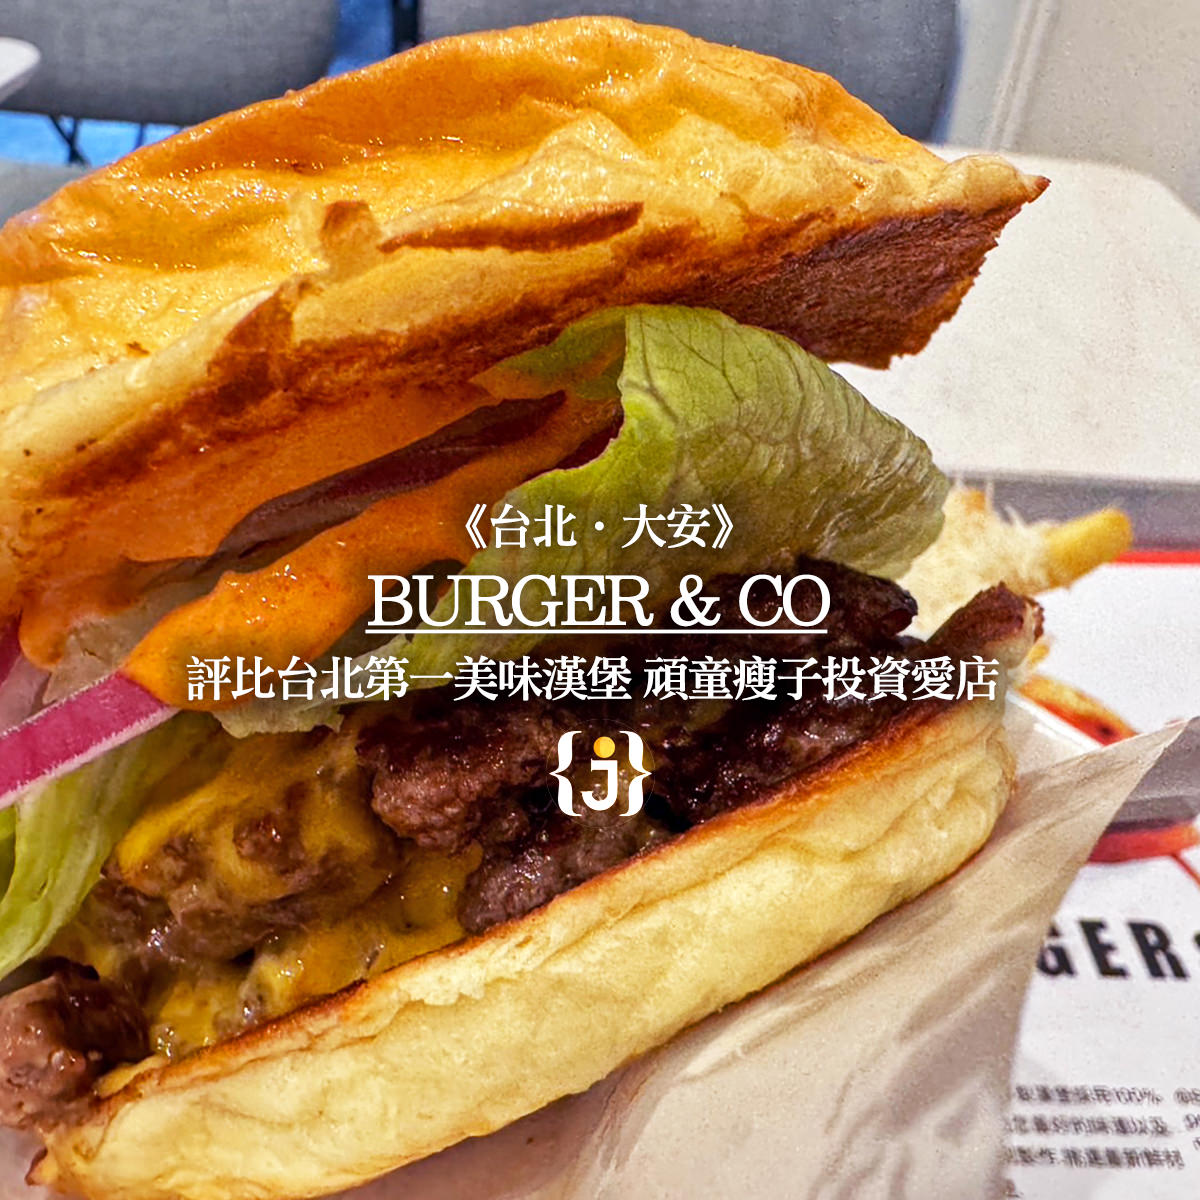 BurgerCo 評比台北第一美味漢堡 頑童瘦子投資愛店